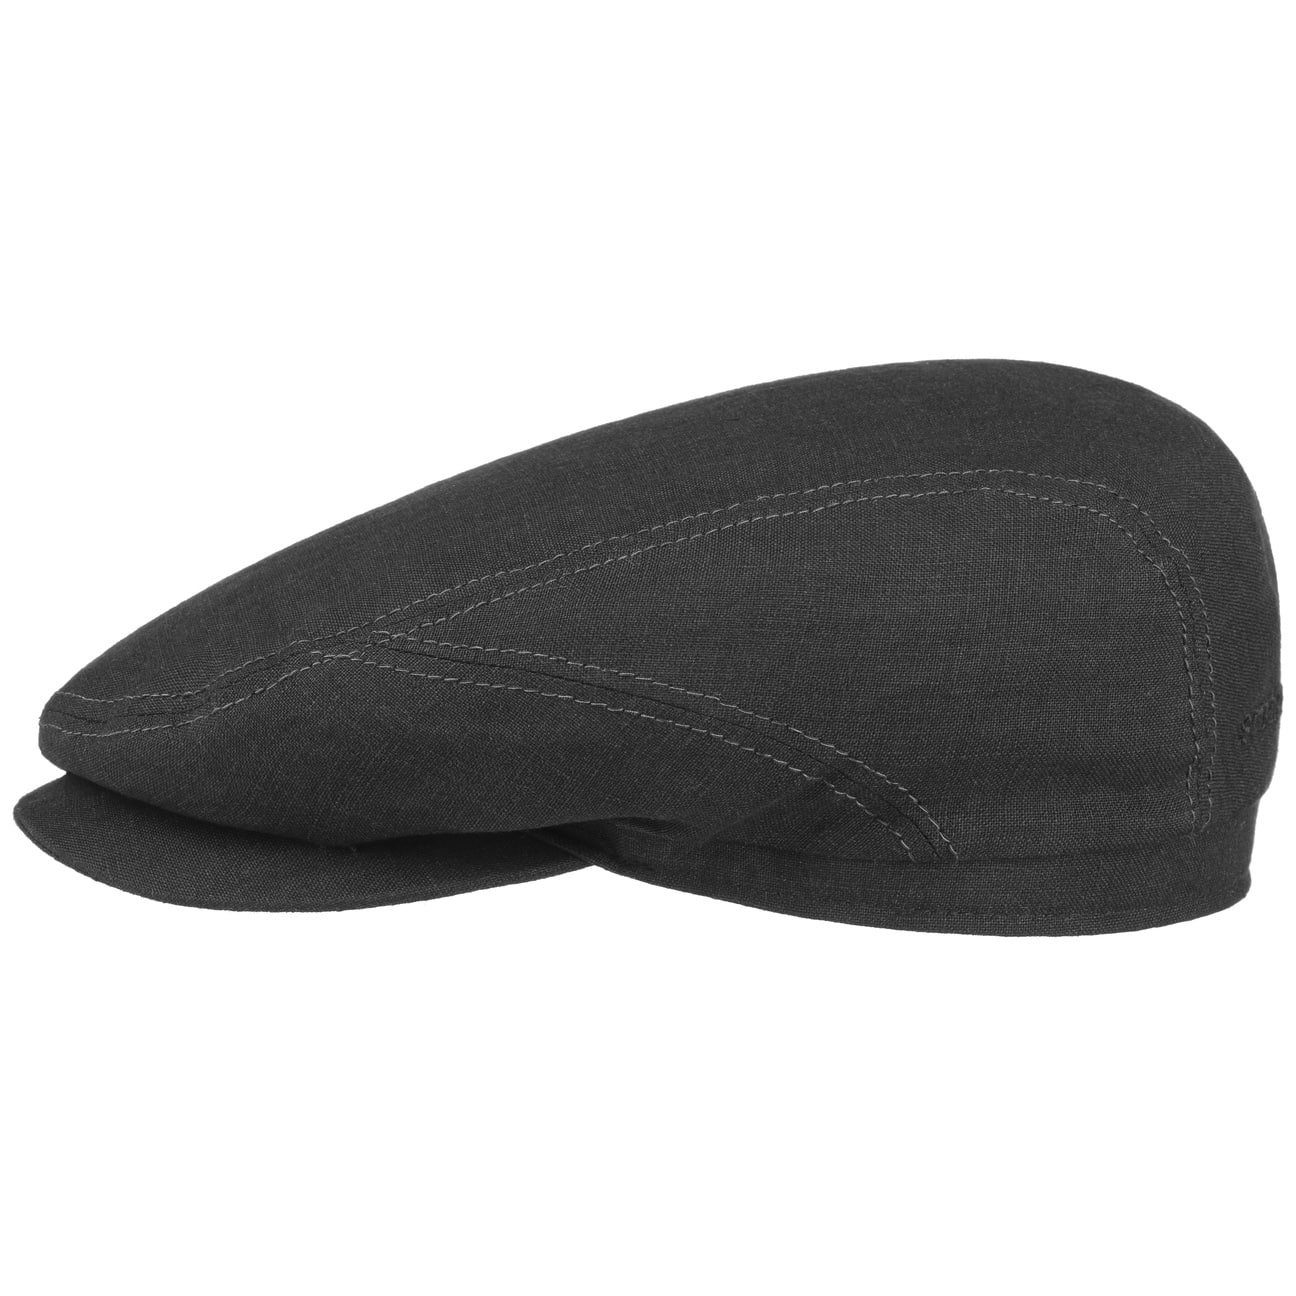 Stetson Flat Cap (1-St) Schirmmütze mit Schirm, Made in the EU schwarz | Flat Caps